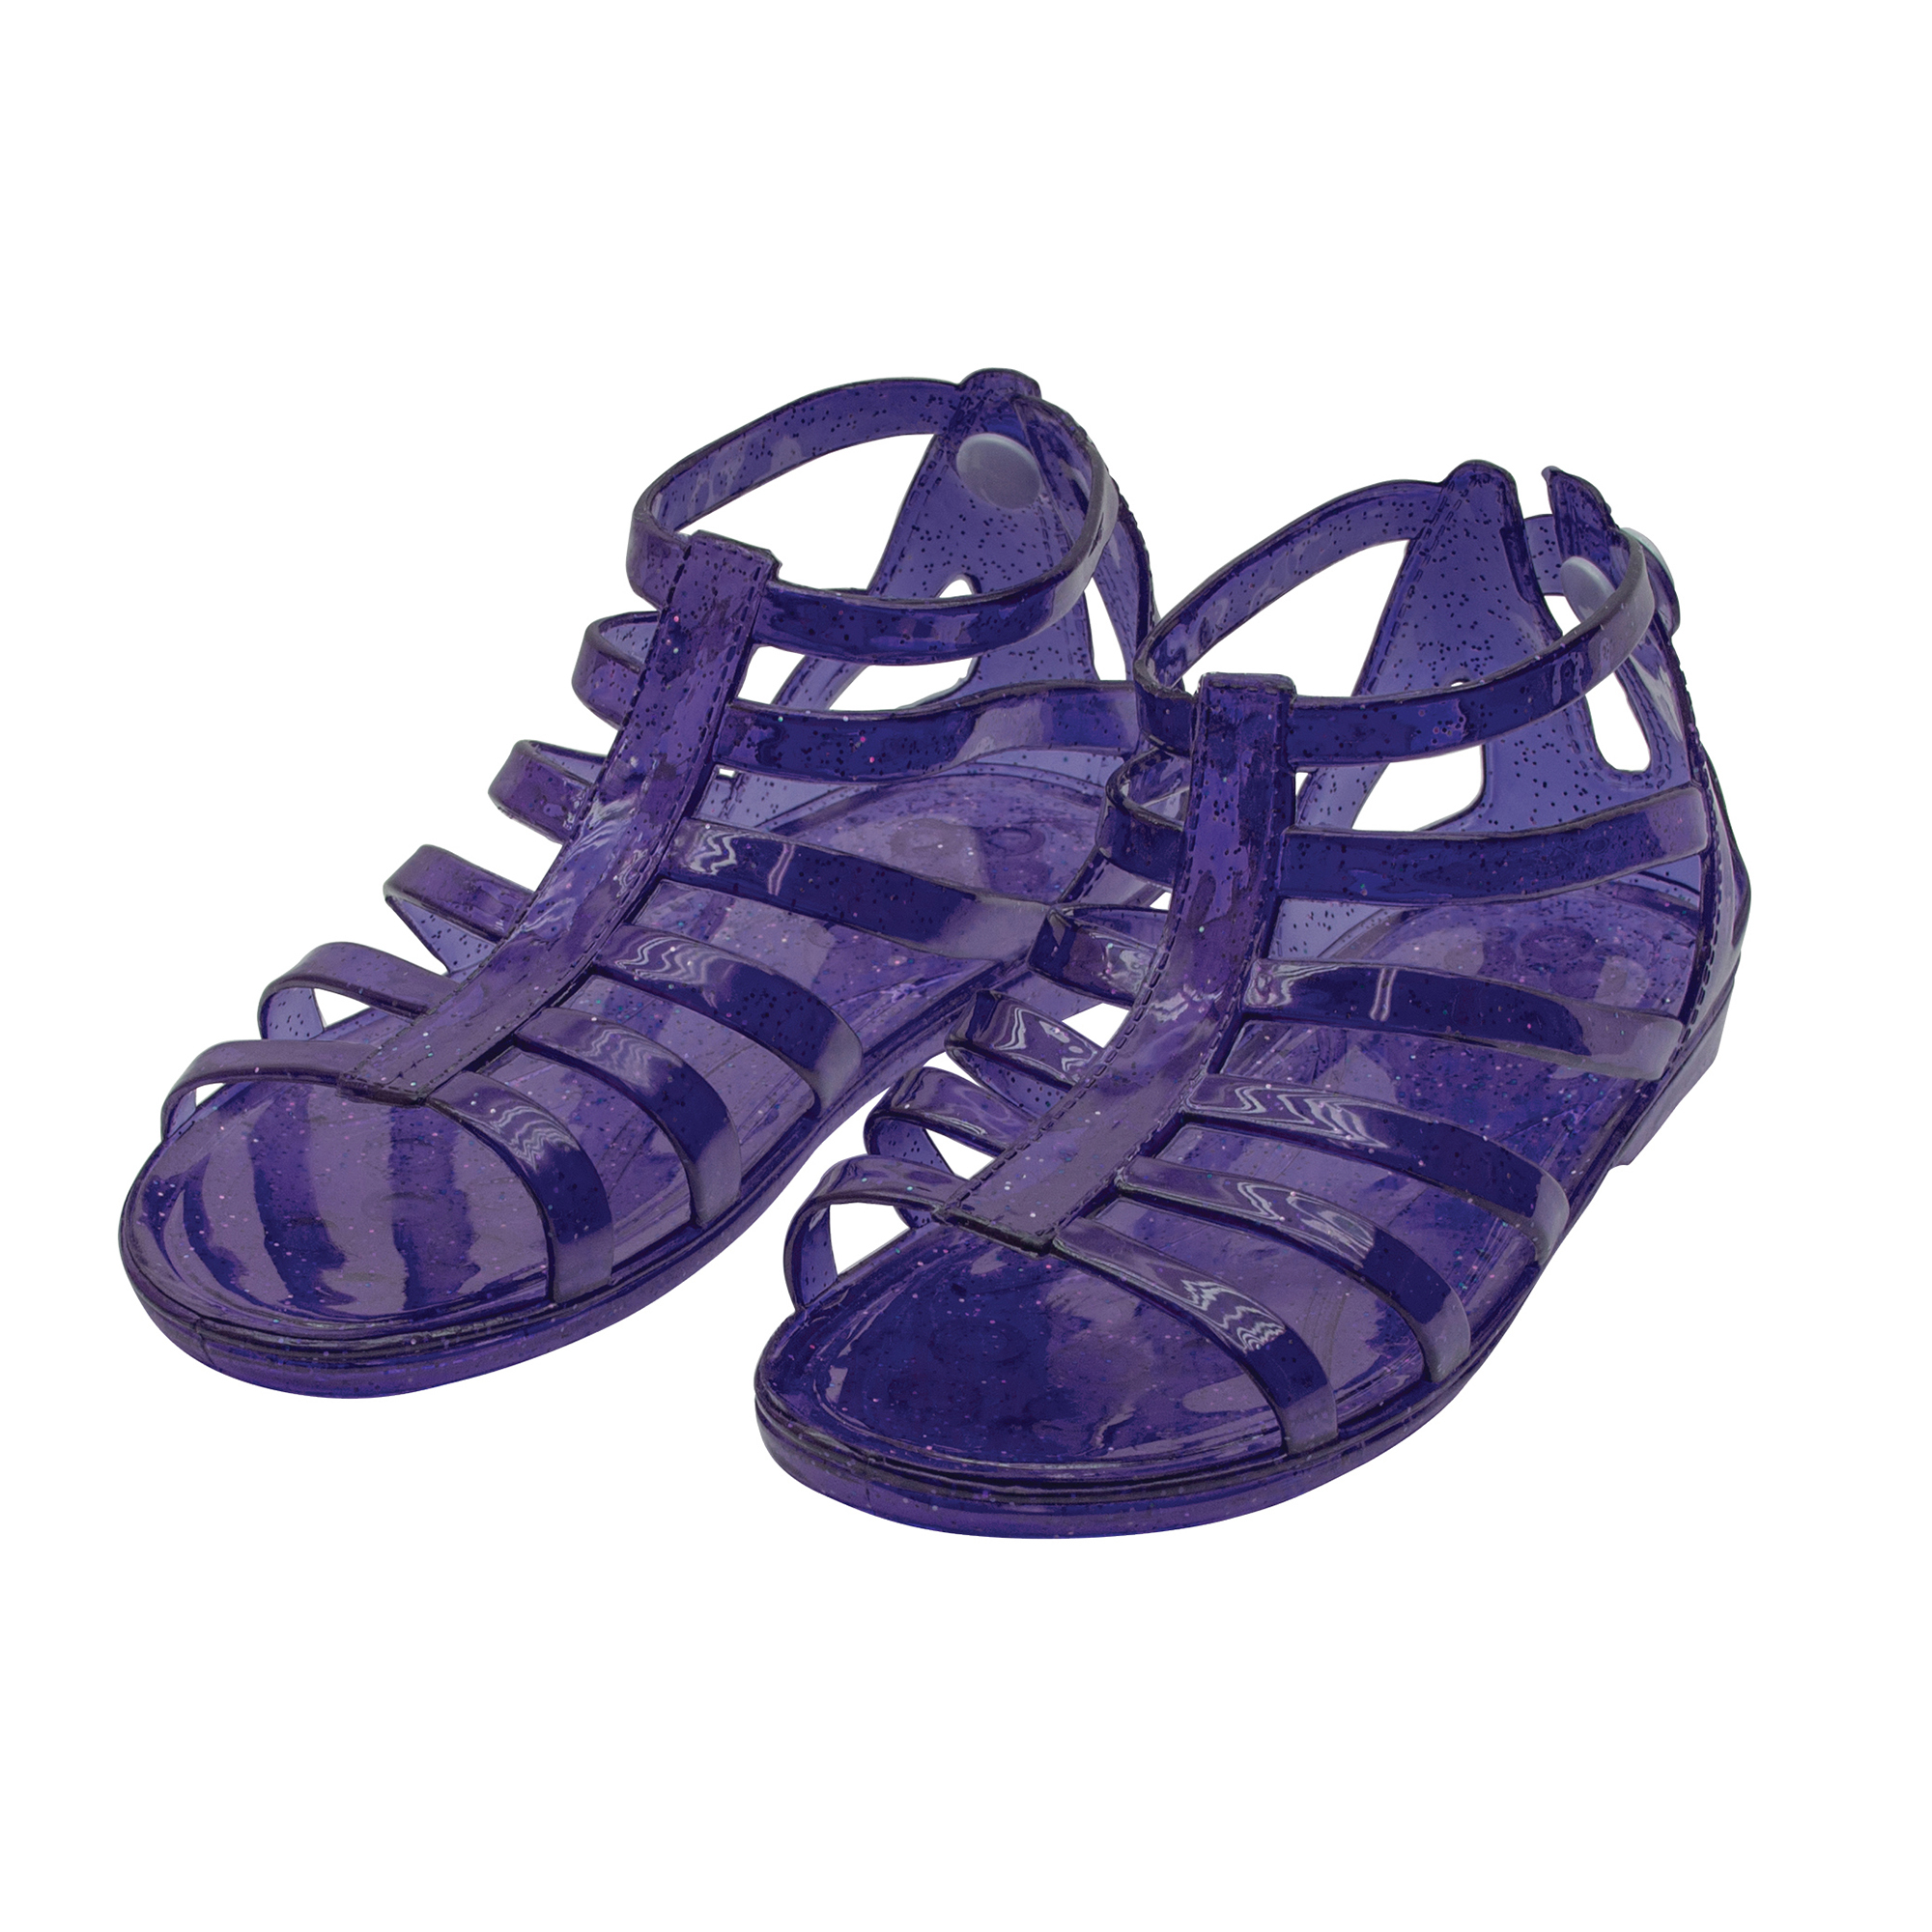 Del Sol Gladiator Girl Jellies Sandal - 1 Purple for Kids 1 Pair Sandals